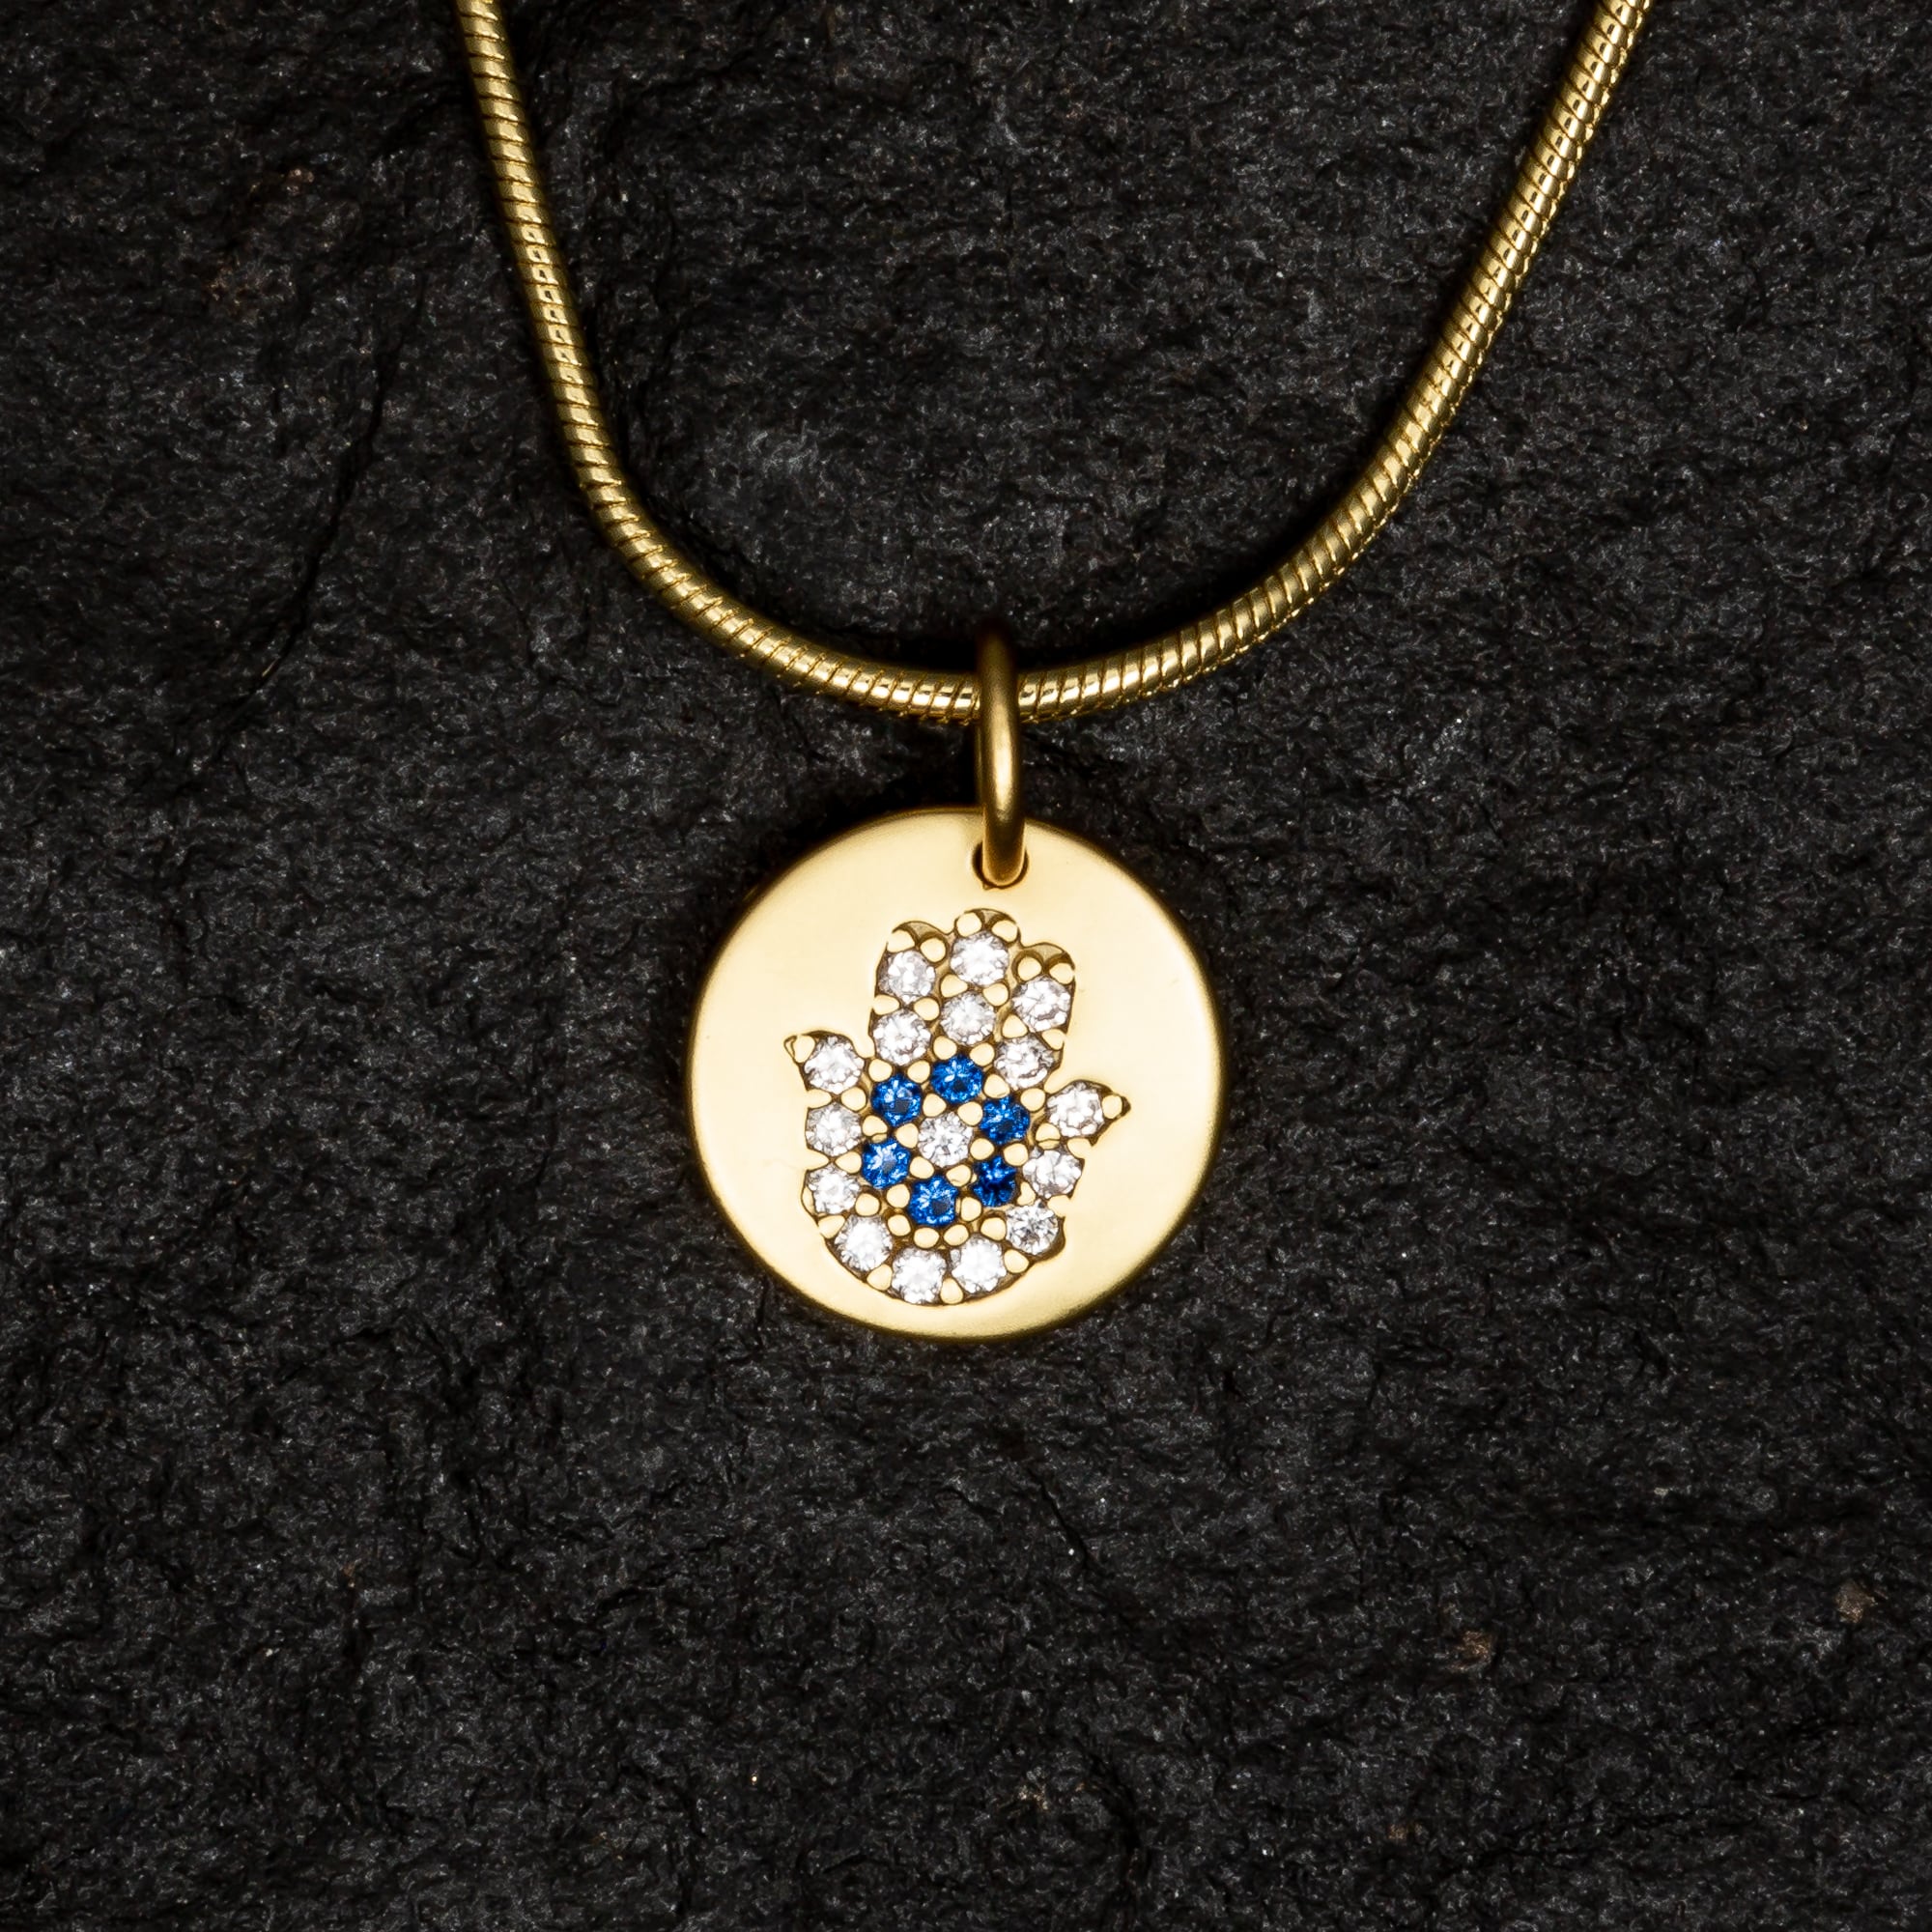 Hamsa Round Necklace with Blue Gemstones and Matt Finish - Necklaces